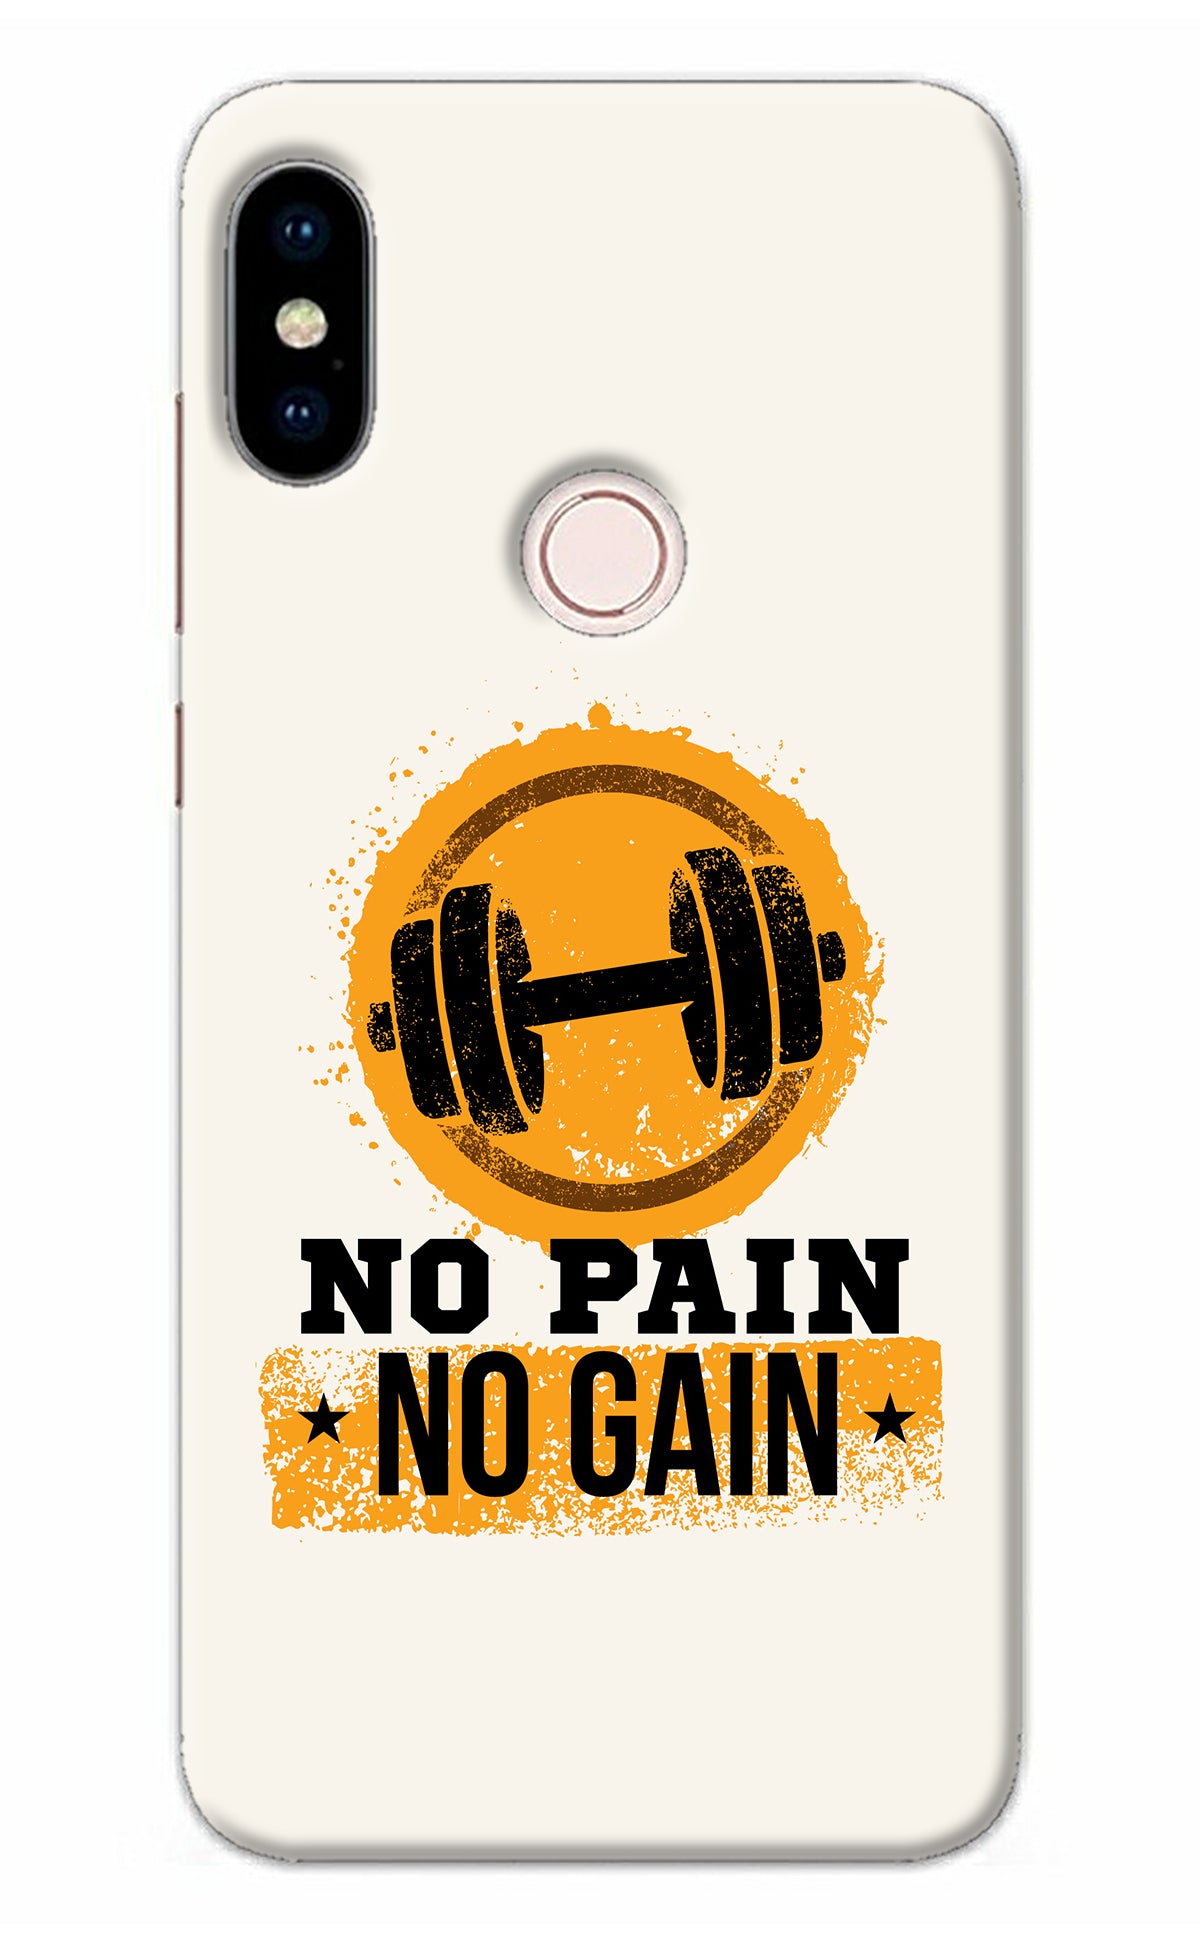 No Pain No Gain Redmi Note 5 Pro Back Cover